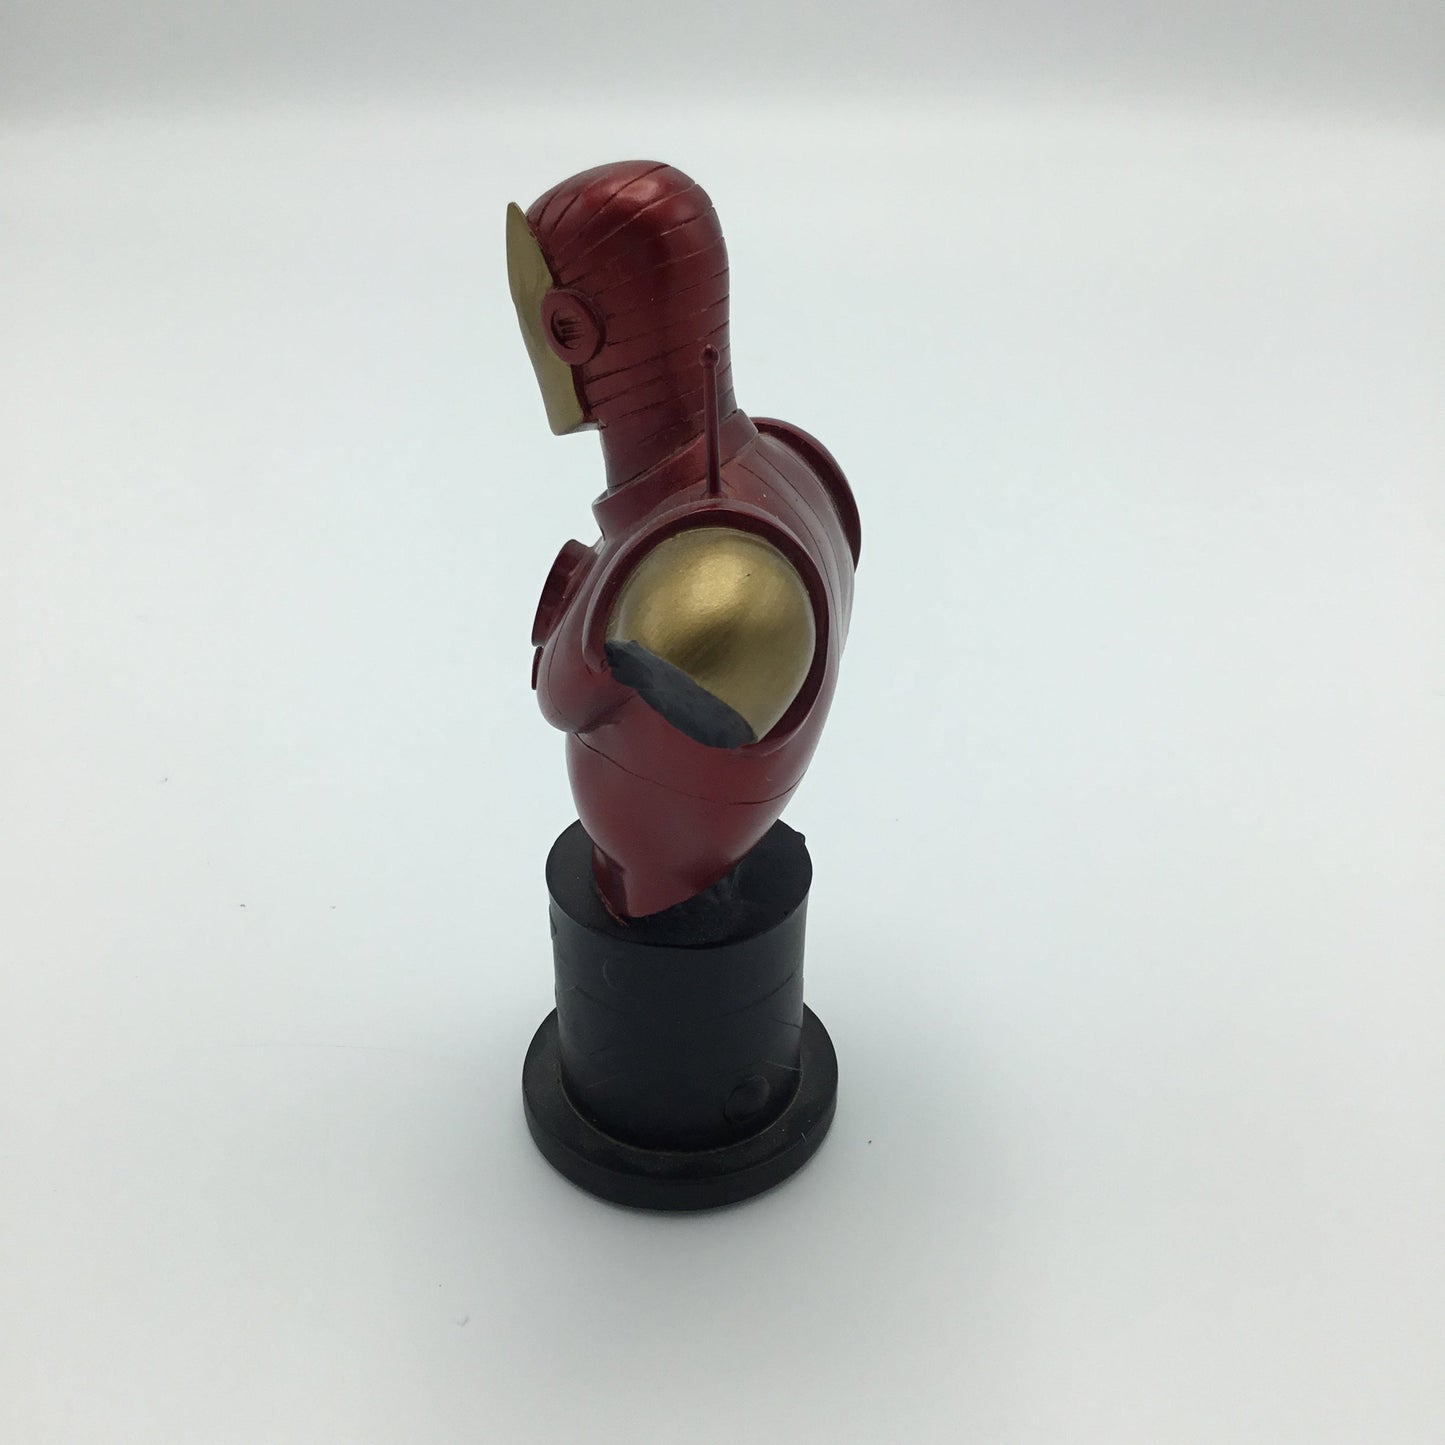 Silver Age Iron Man Mini-Bust - Randy Bowen Designs Marvel - 3143/4000